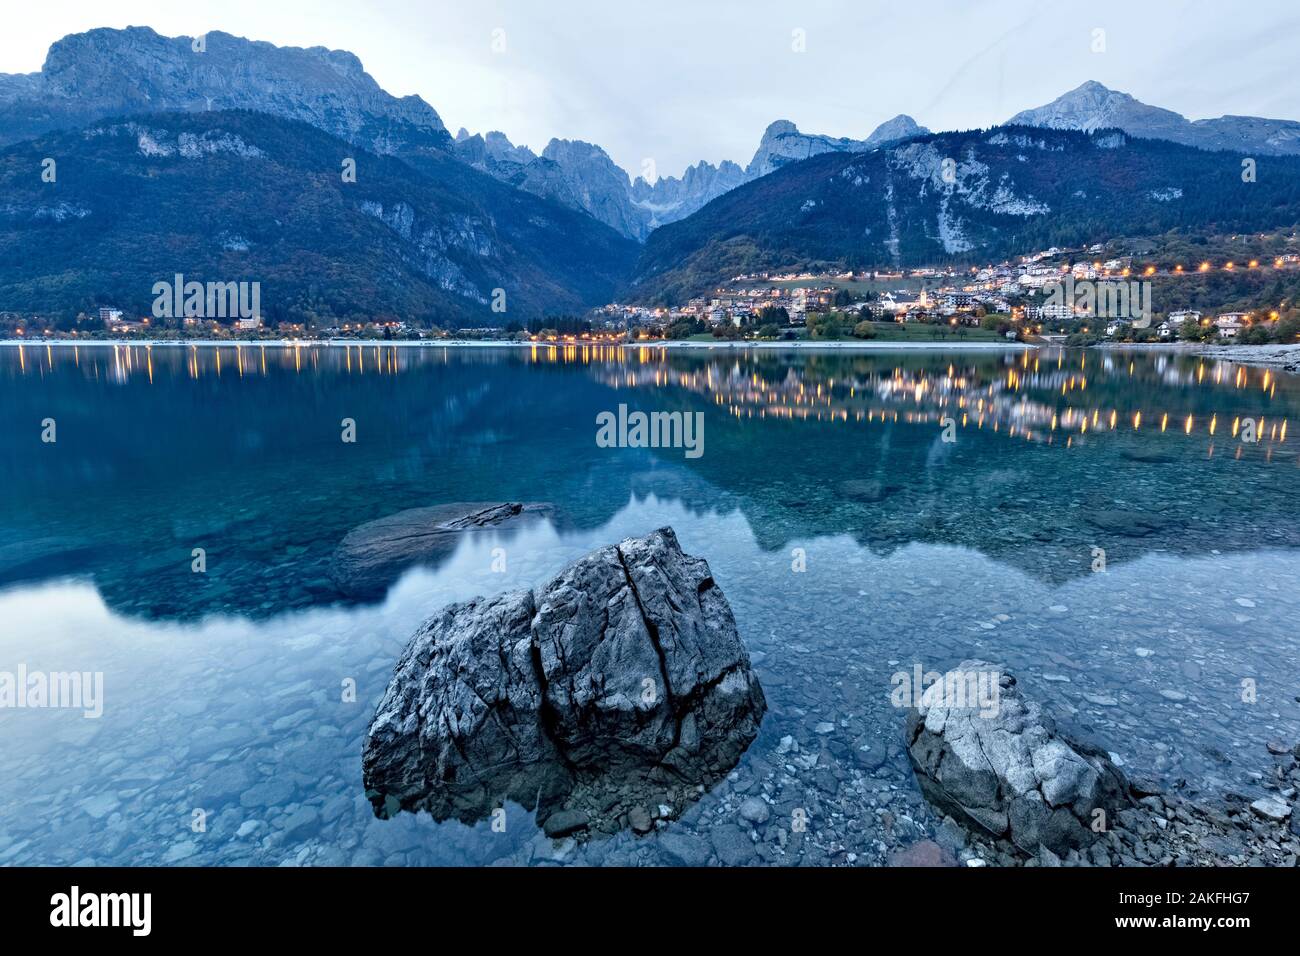 Die Brenta Dolomiten sind in den Lago di Molveno wider. Trient Provinz Trentino Alto-Adige, Italien, Europa. Stockfoto